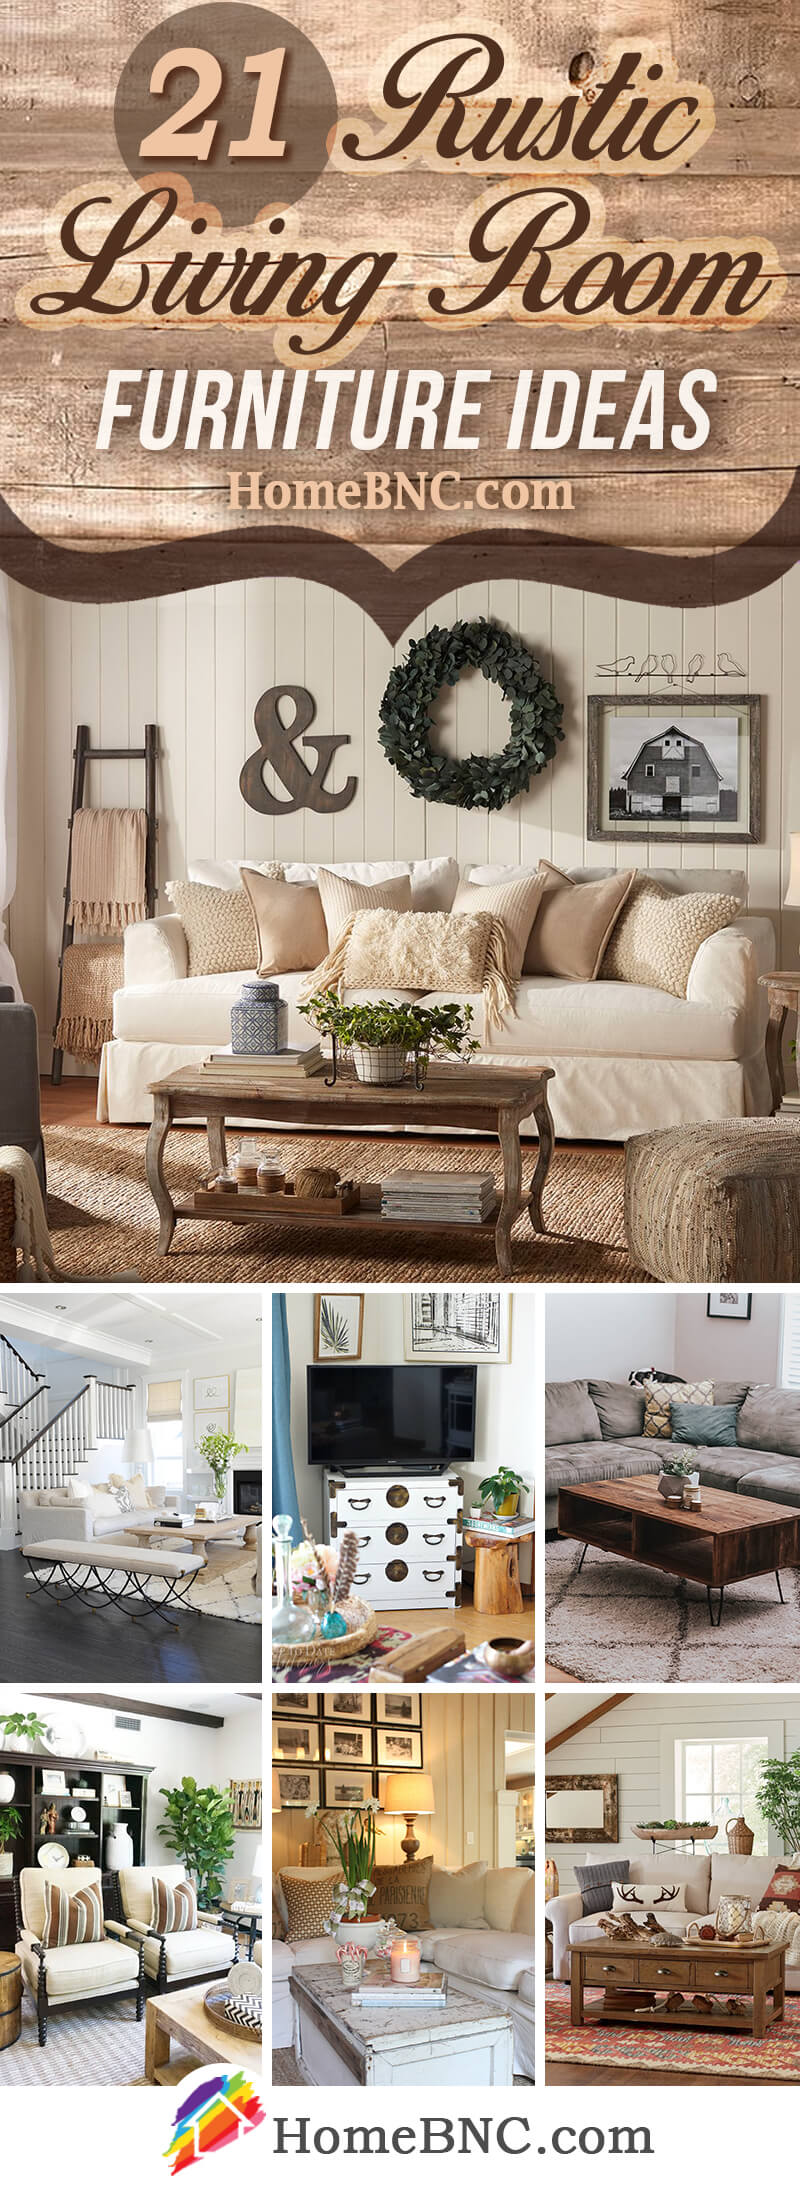 Rustic Living Room Furniture Decor and Design Ideas — Homebnc